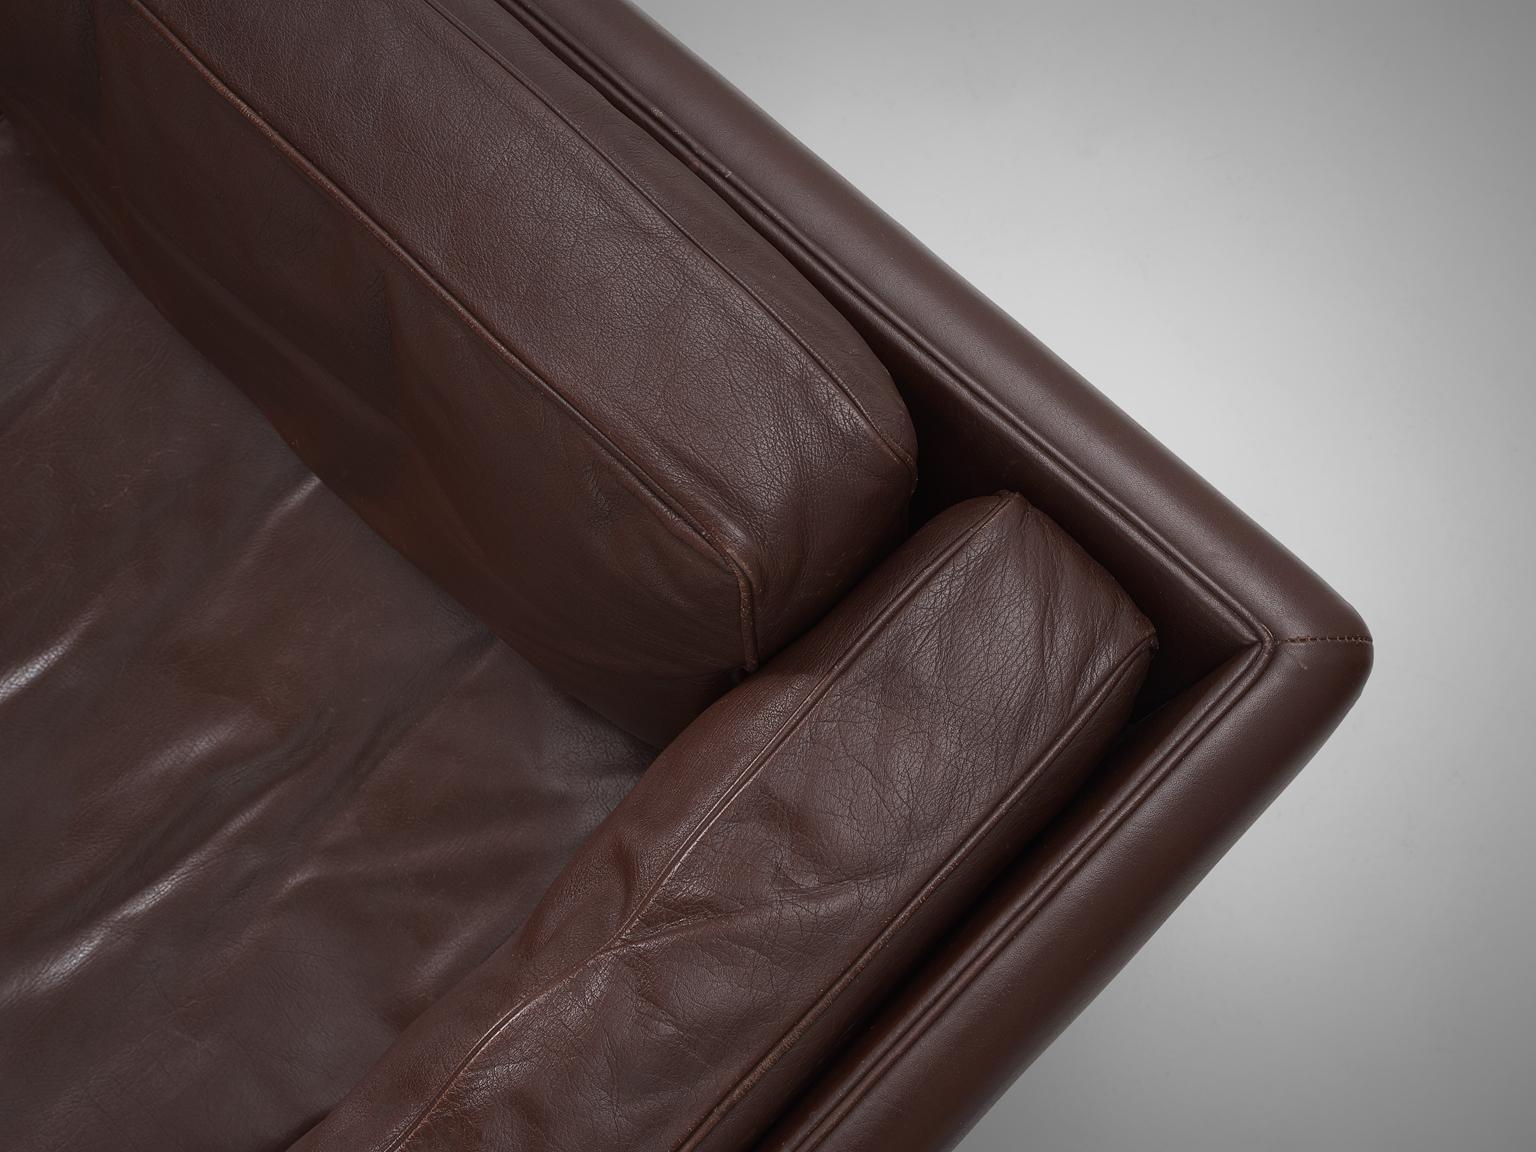 Mid-20th Century Illum Wikkelsø Three-Seat Sofa 'V11' in Dark Brown Leather